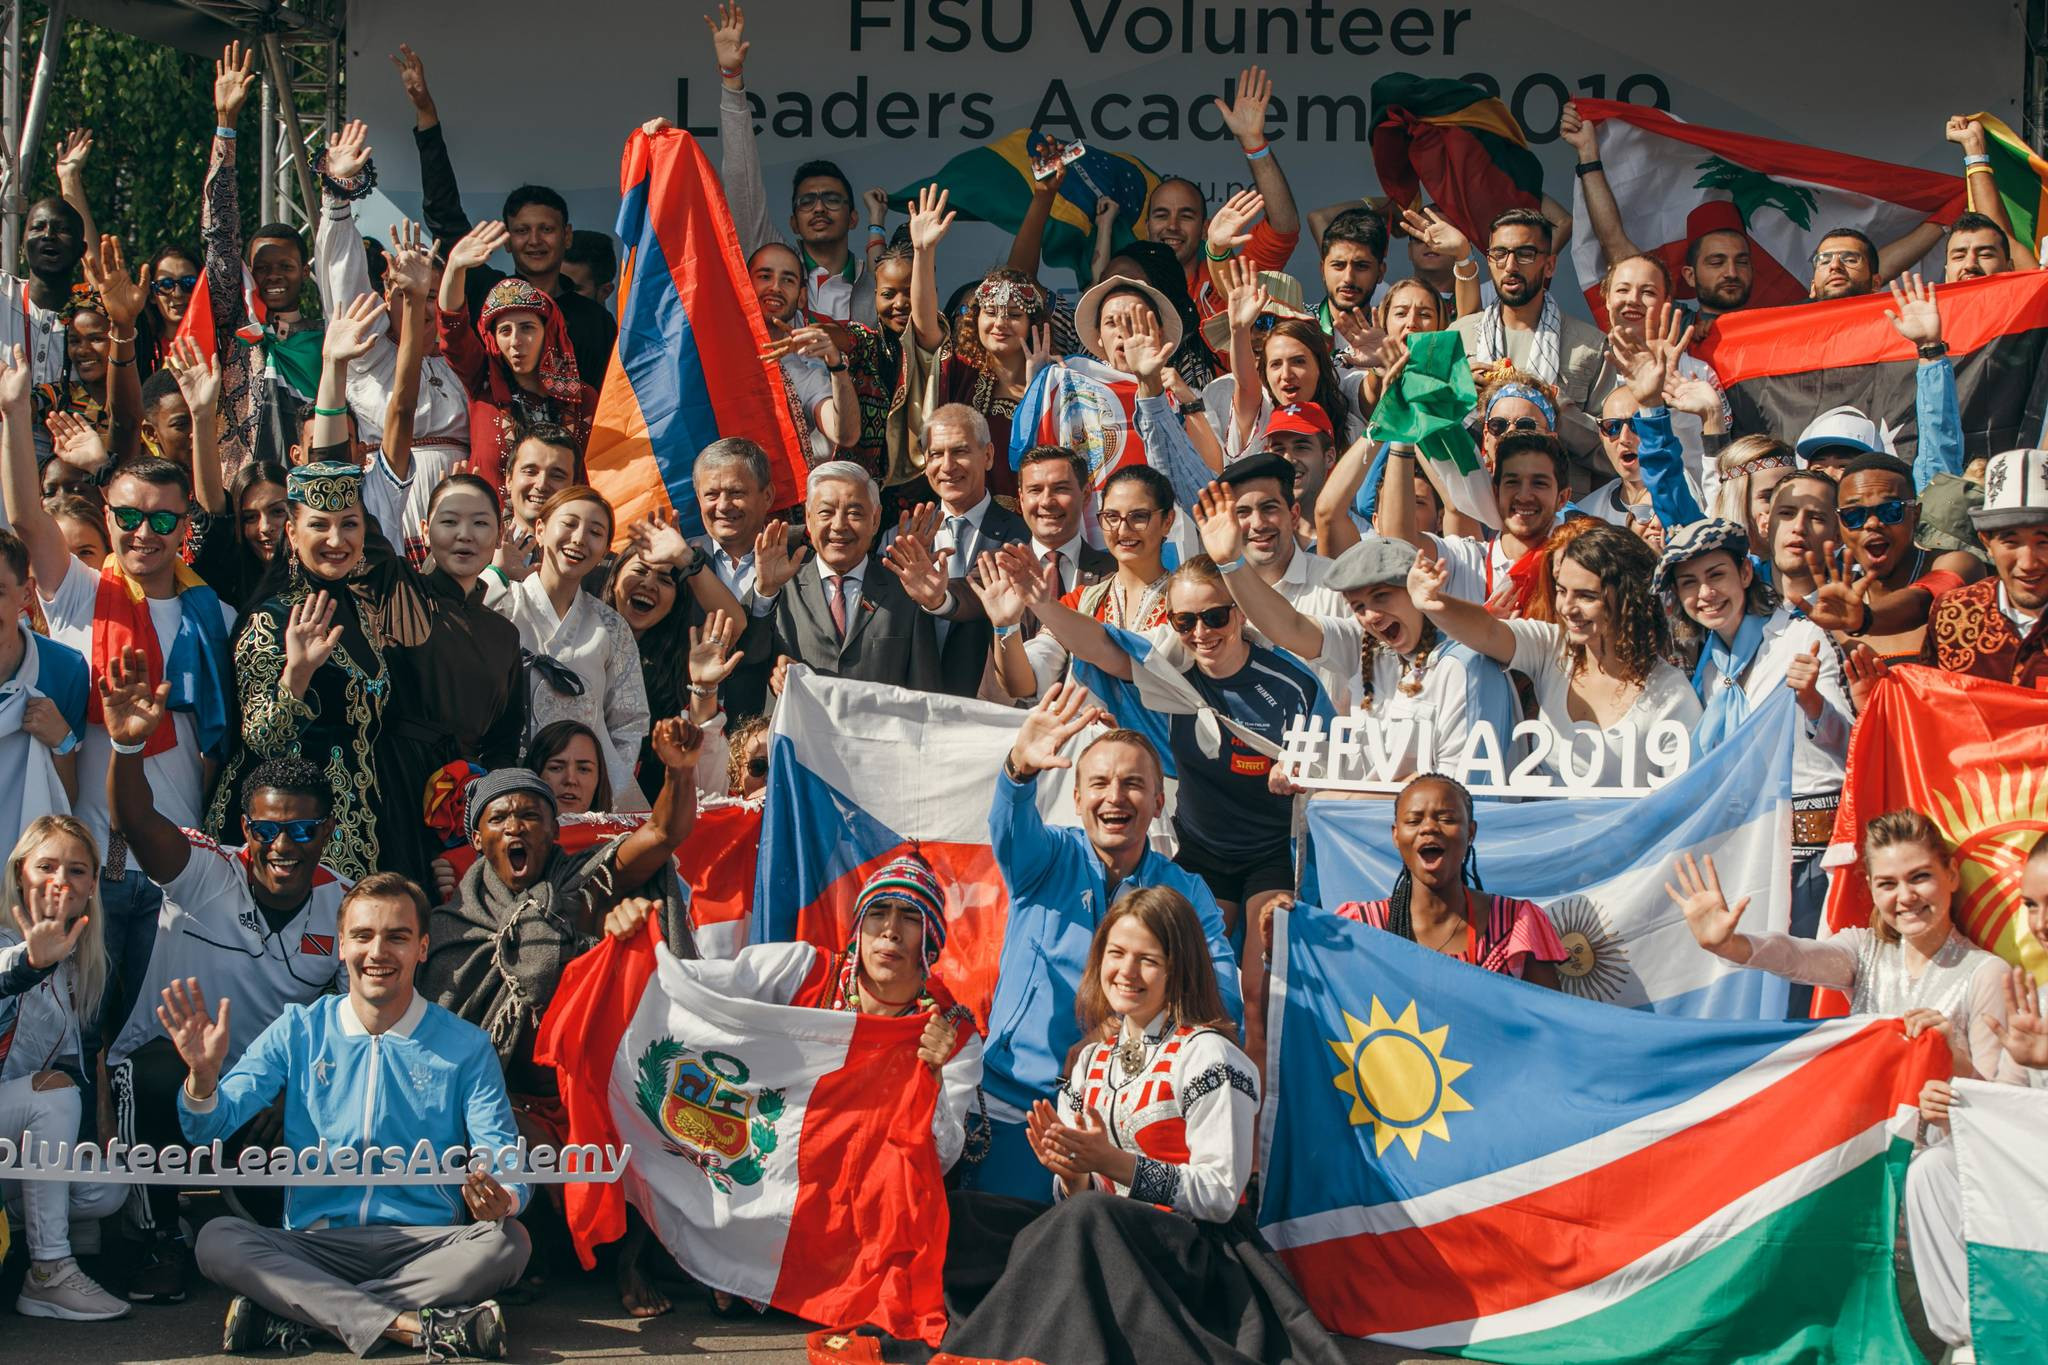 FISU hold third edition of Volunteer Leaders Academy in Tatarstan